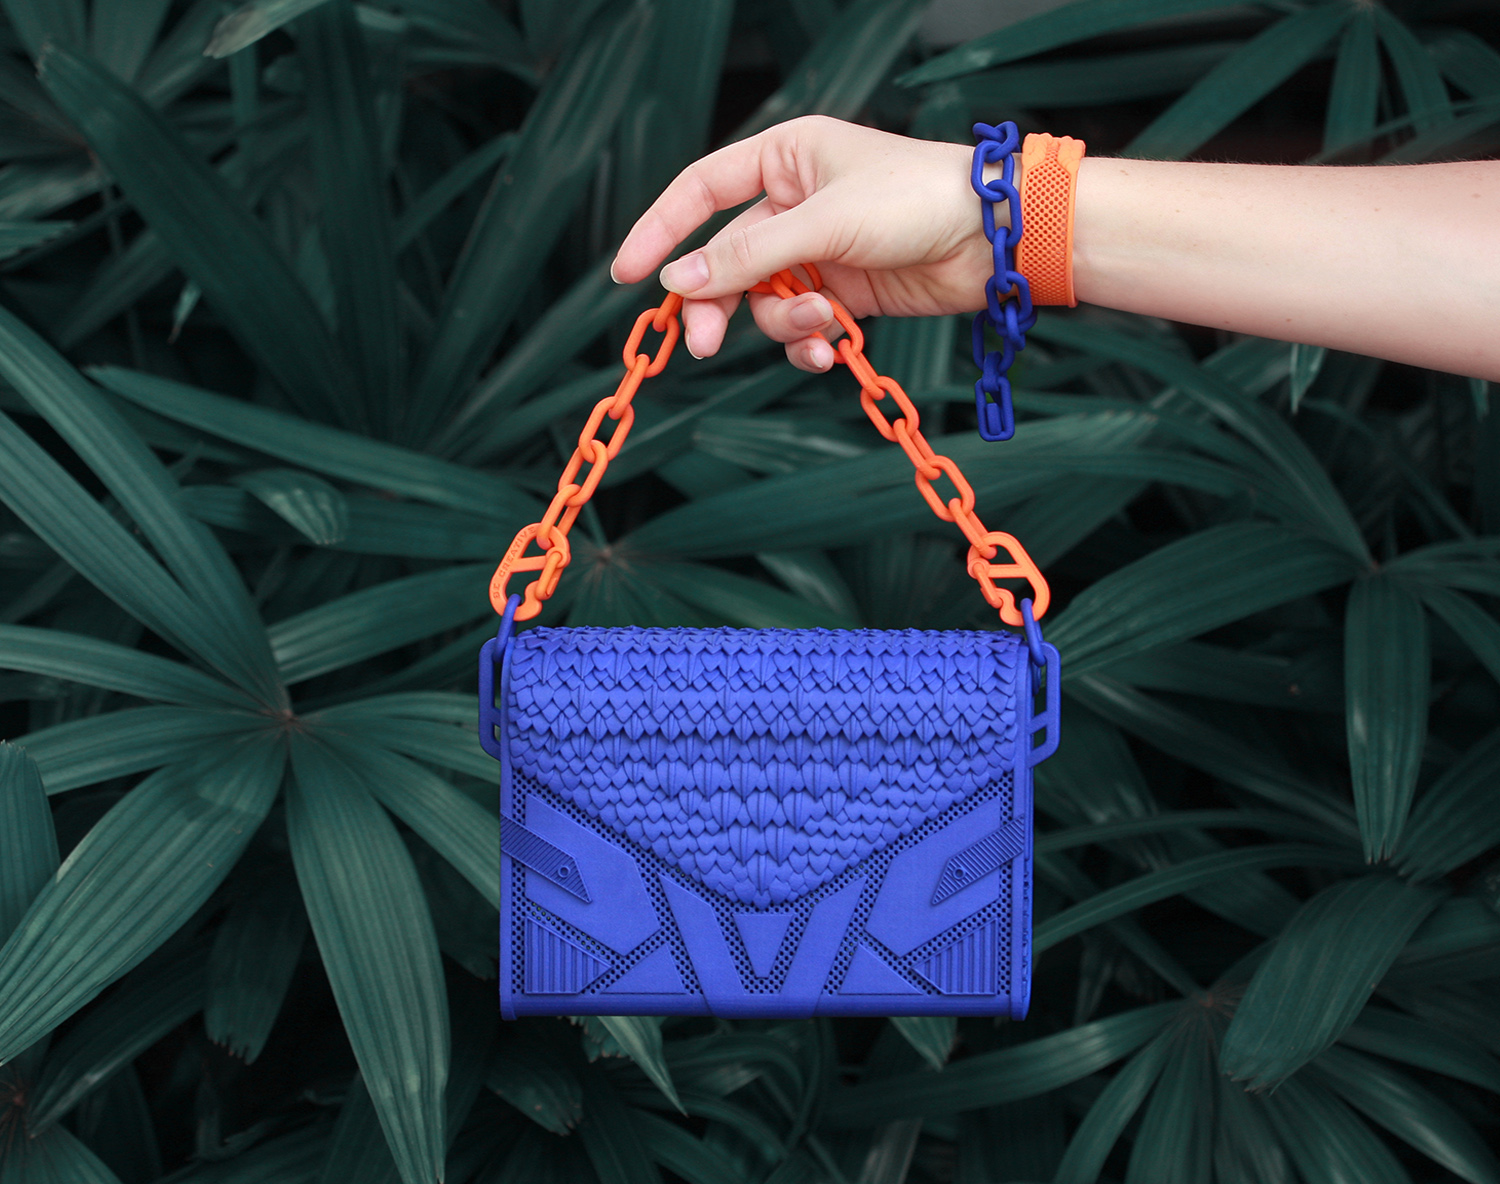 3D Printed Handbag Tutorial | DIY Fashion Accessory - YouTube